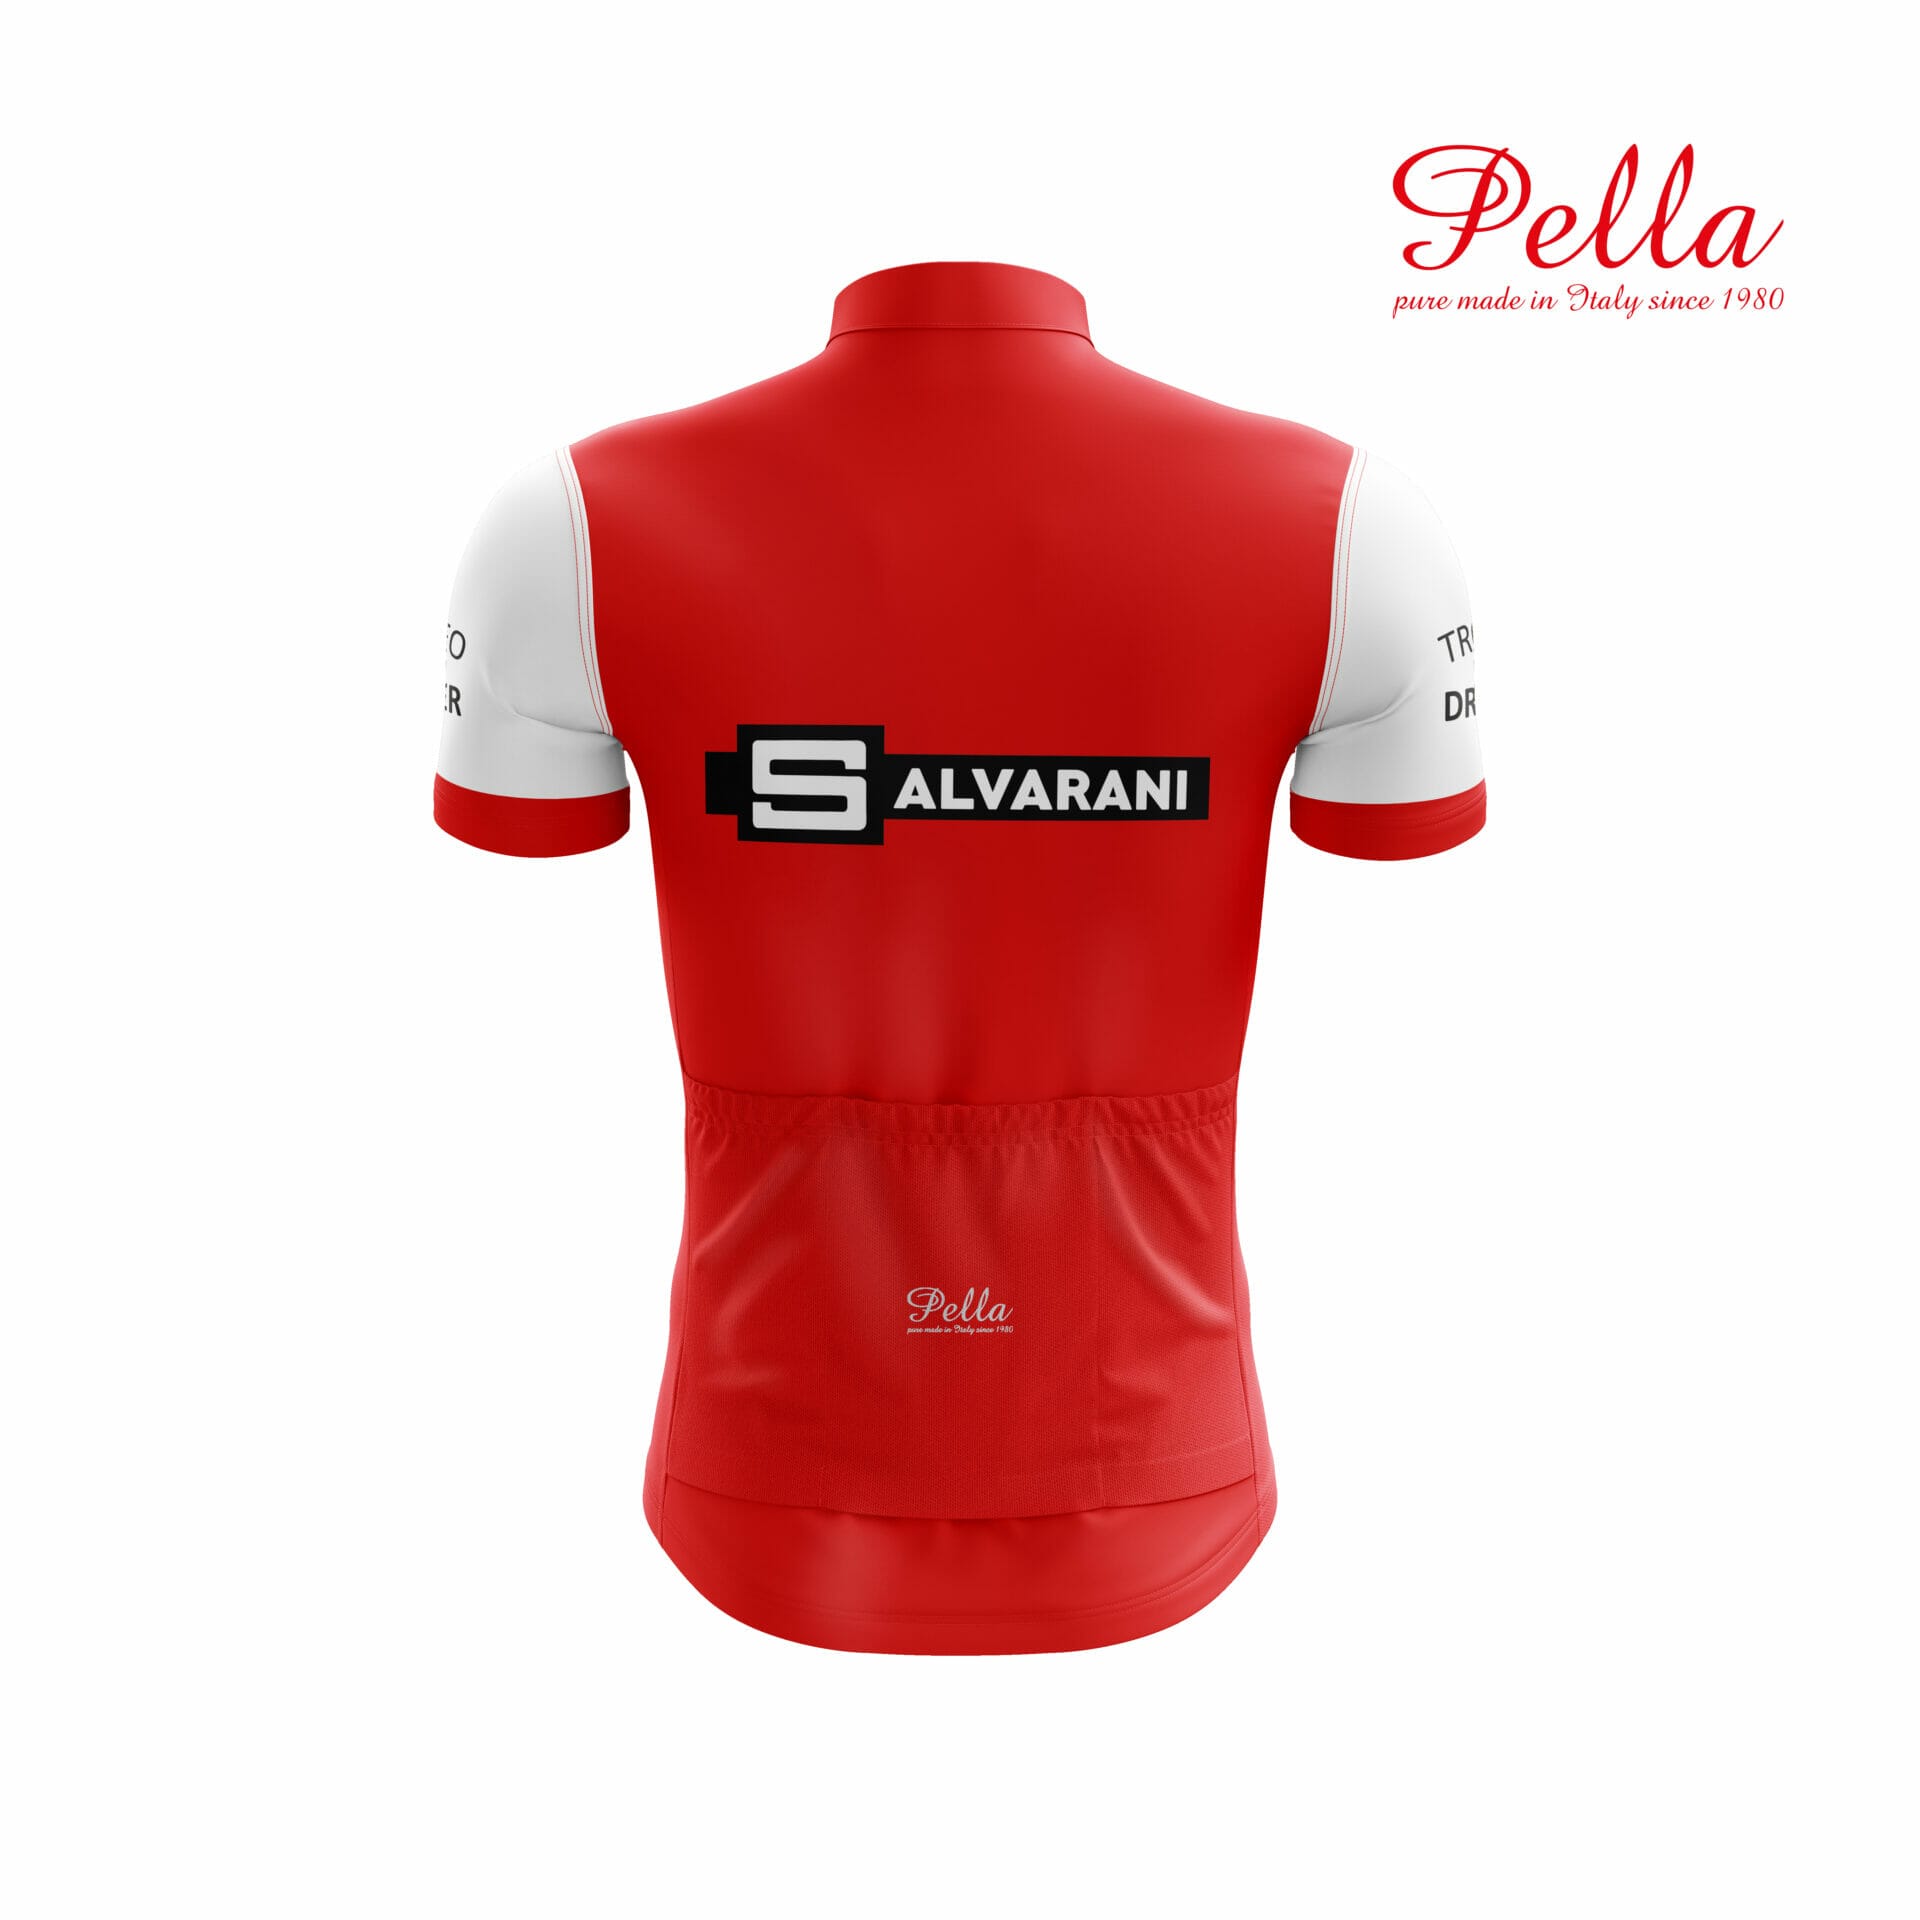 Salvarani CL Punti Giro d'Italia 1965 1966 1967 Jersey - PellaSportswear